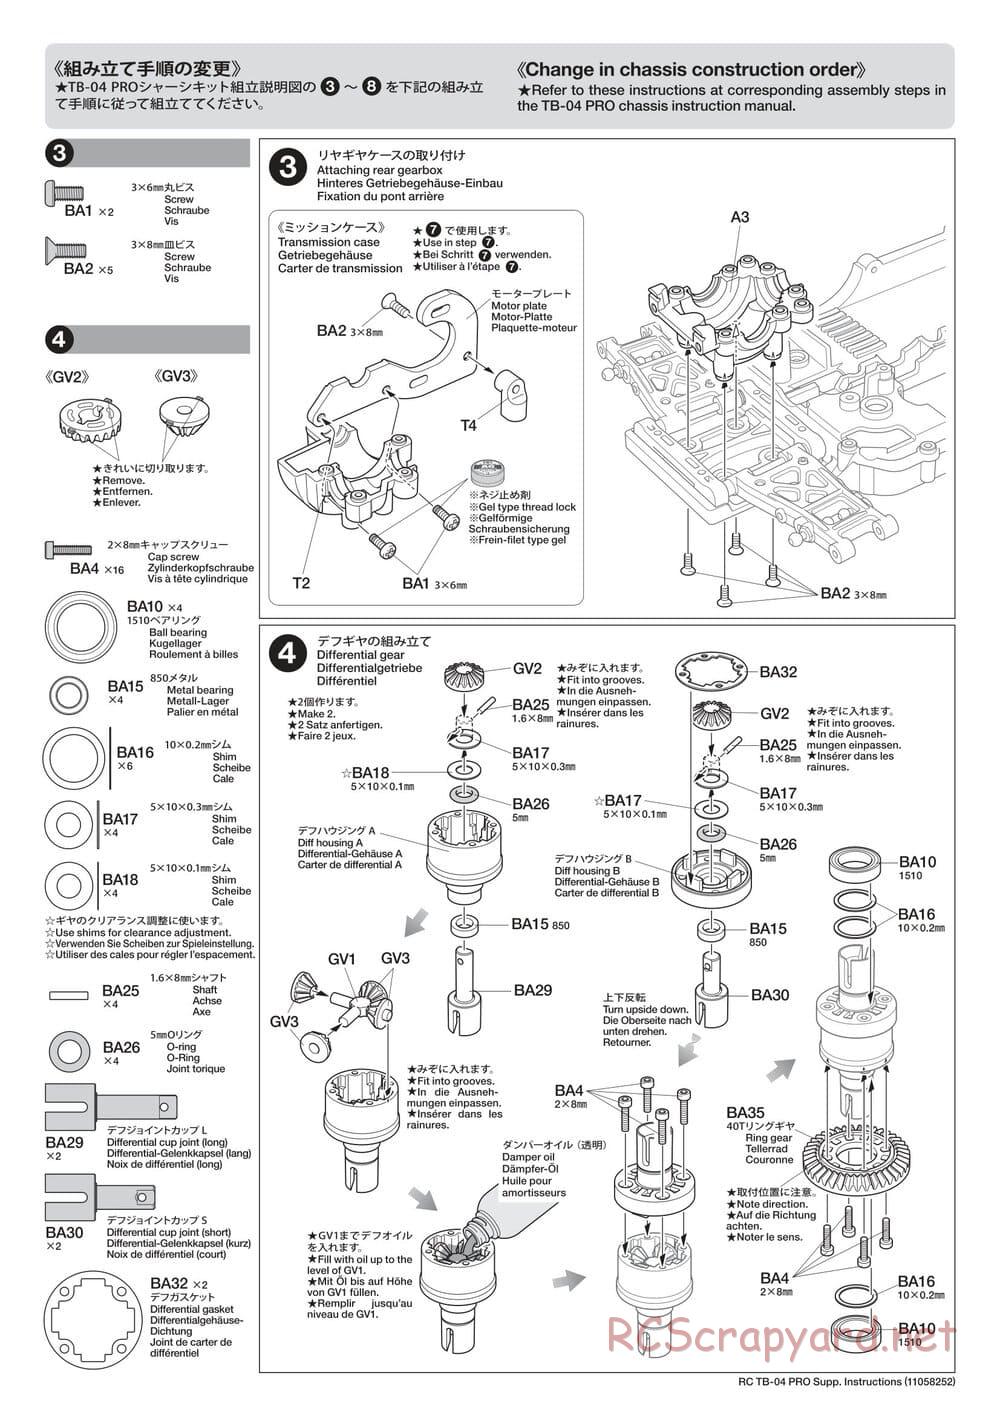 Tamiya - TB-04 Pro Chassis - Manual Update - Page 1